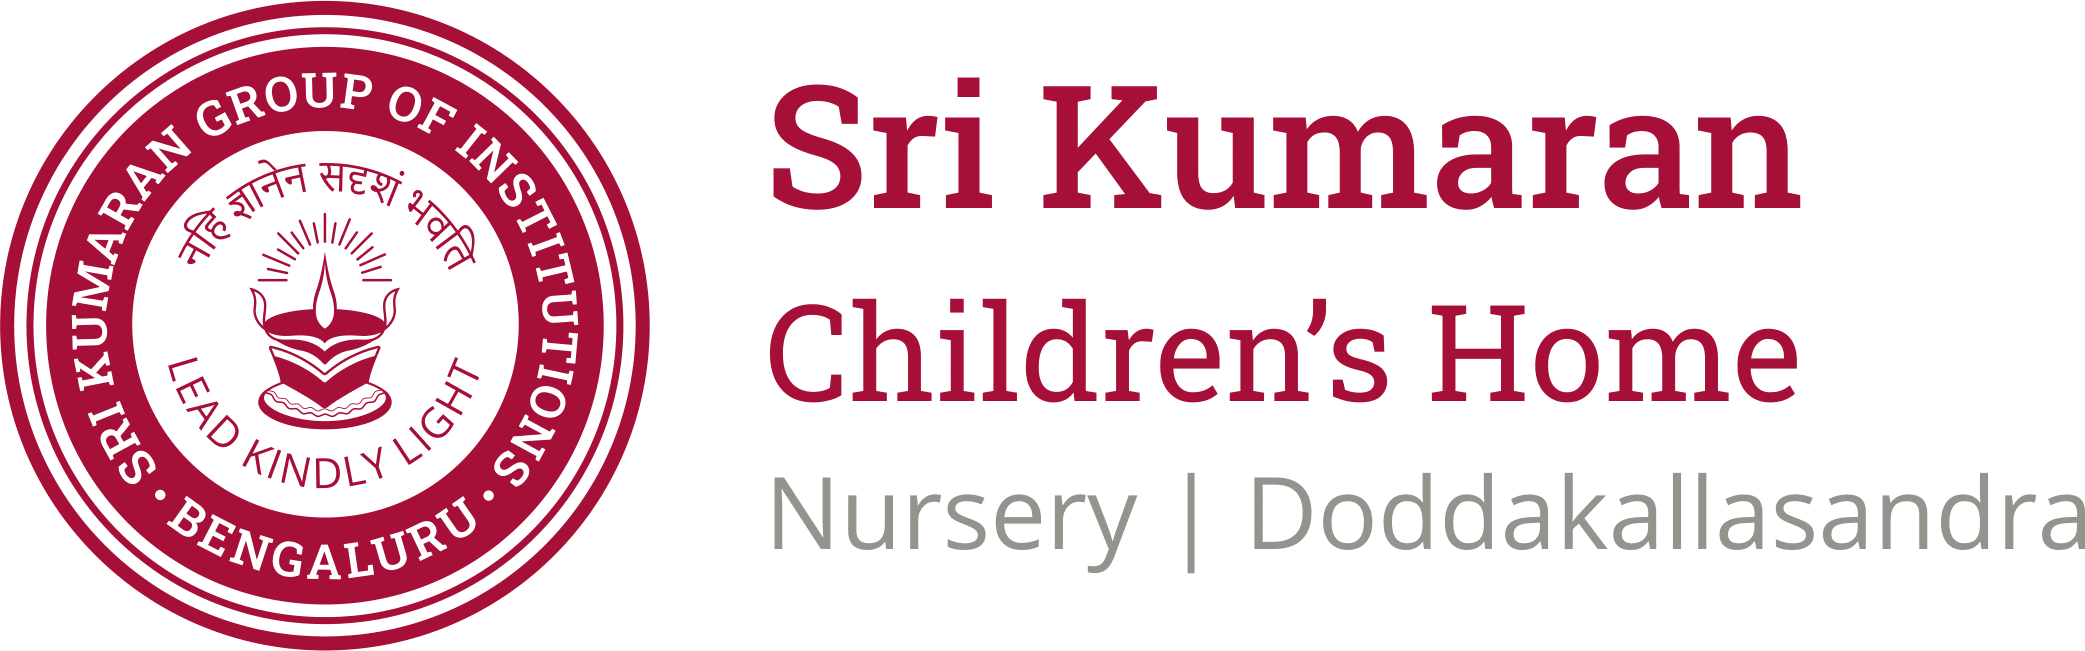 Sri Kumaran Childrens Home - Nuresry | Doddakallasandra